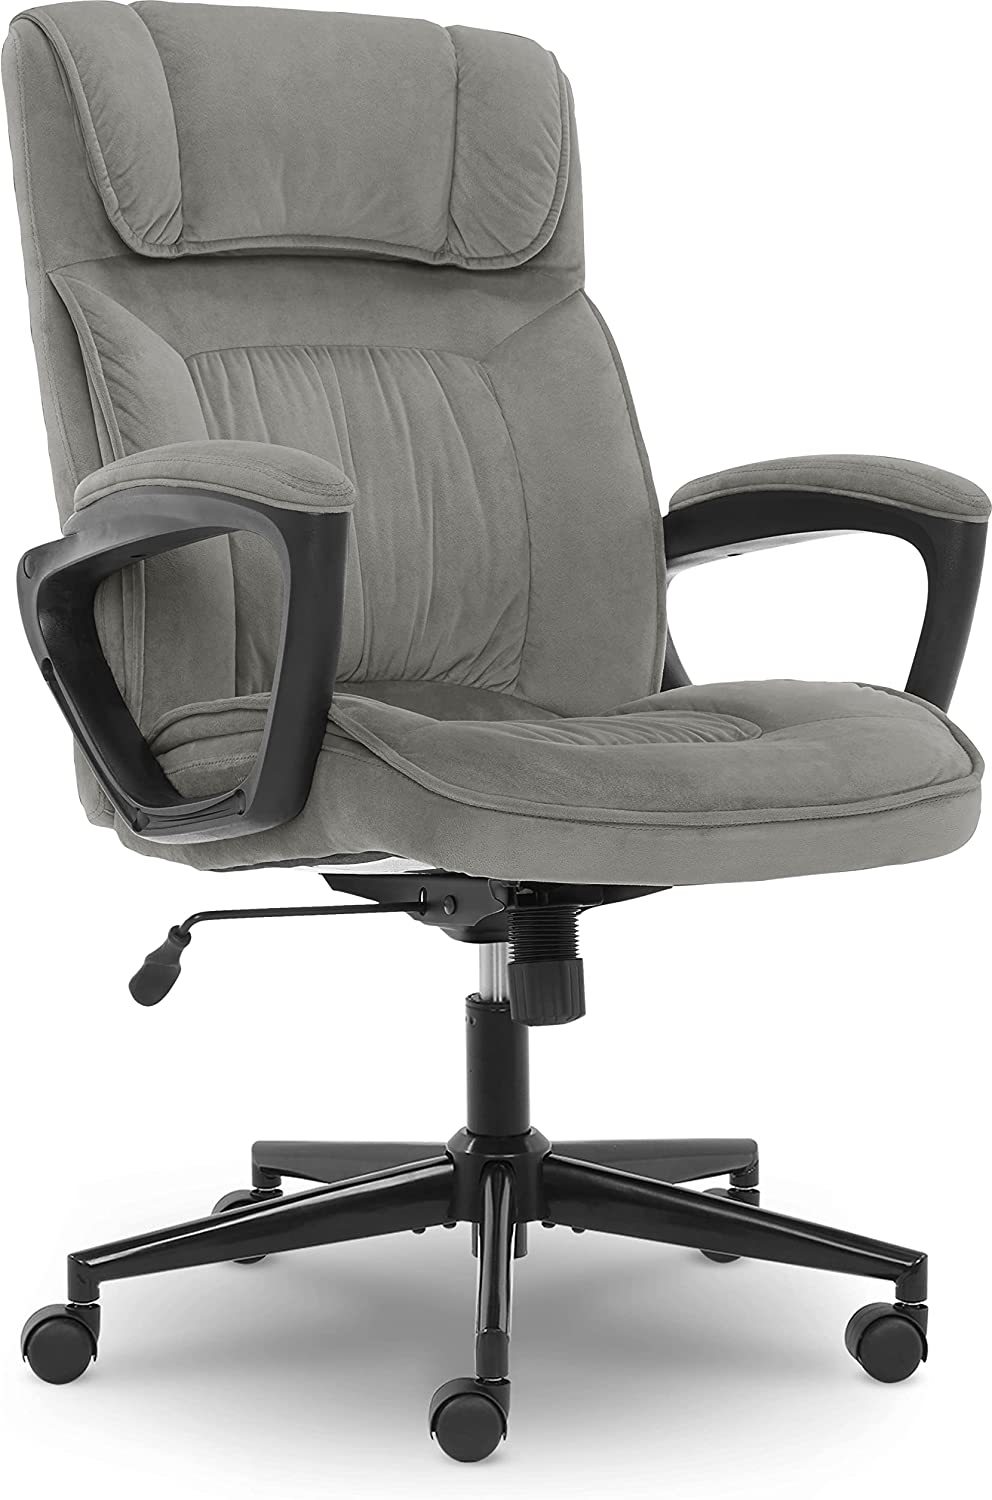 Serta Executive Office Chair Ergonomic Computer Upholstered Layered Body - $225.99